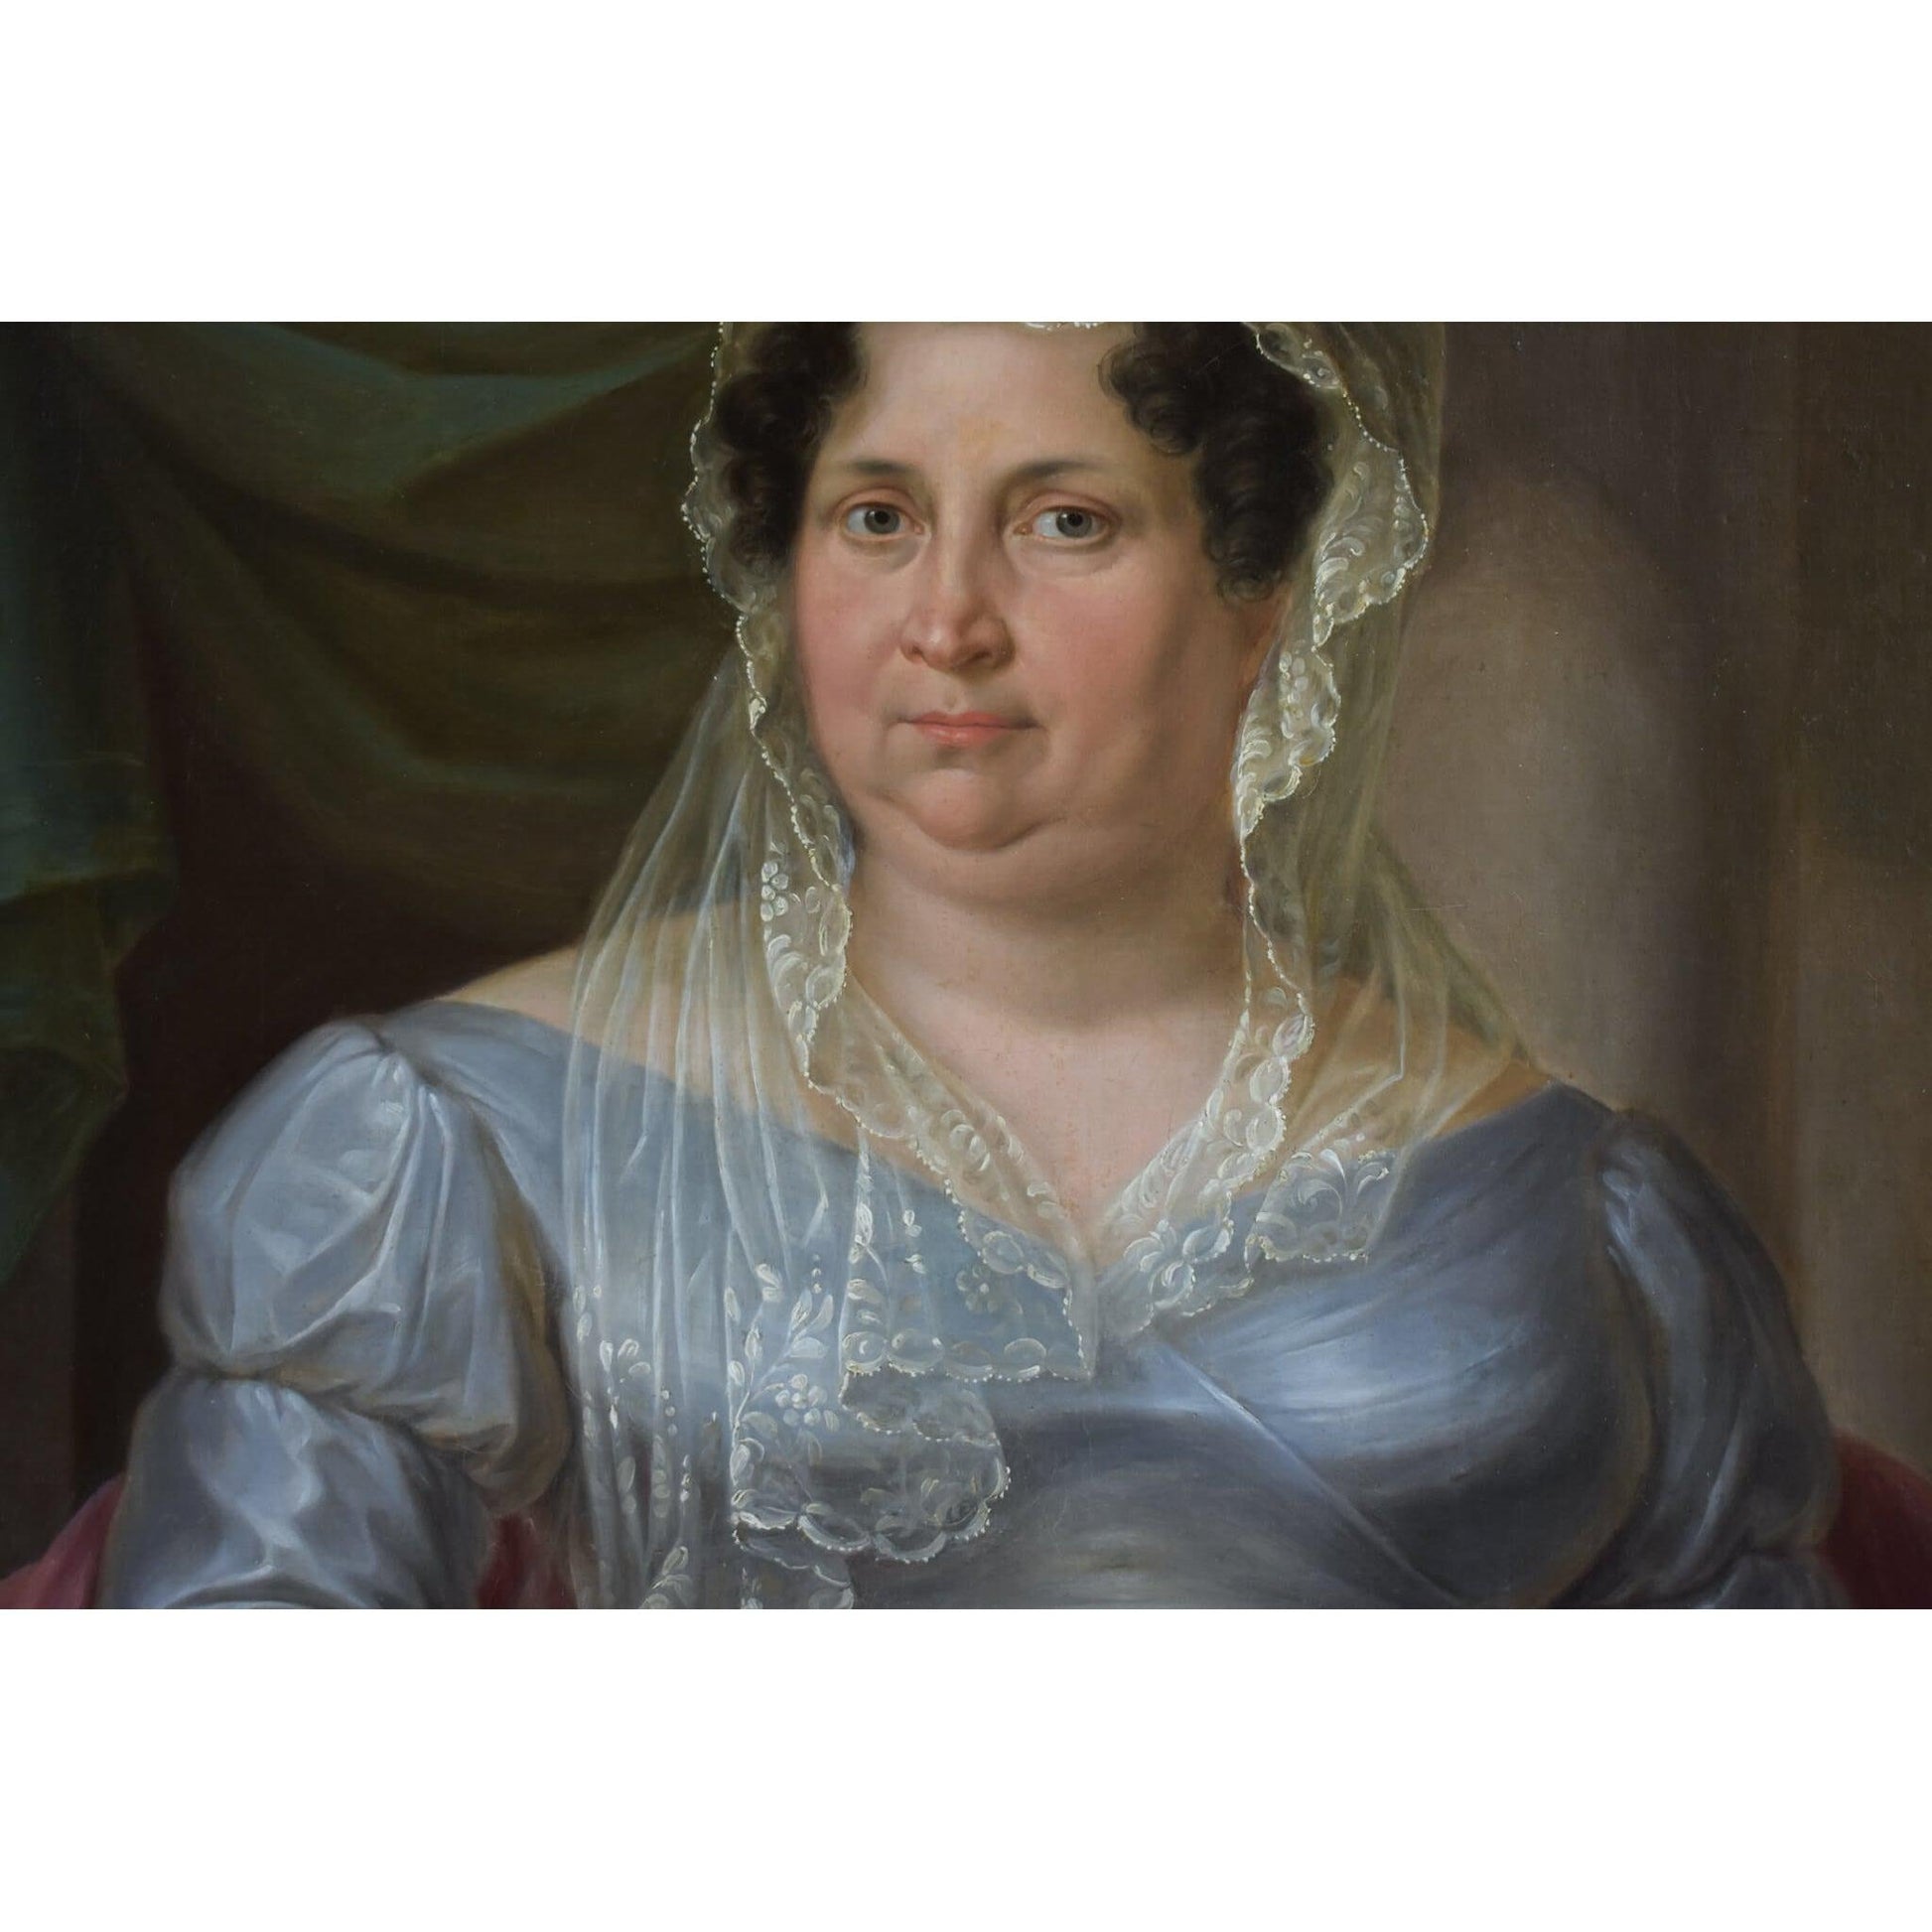 Antique portrait oil painting woman elegant blue dress original 1822 by Anton Bayer for sale at Winckelmann Gallery